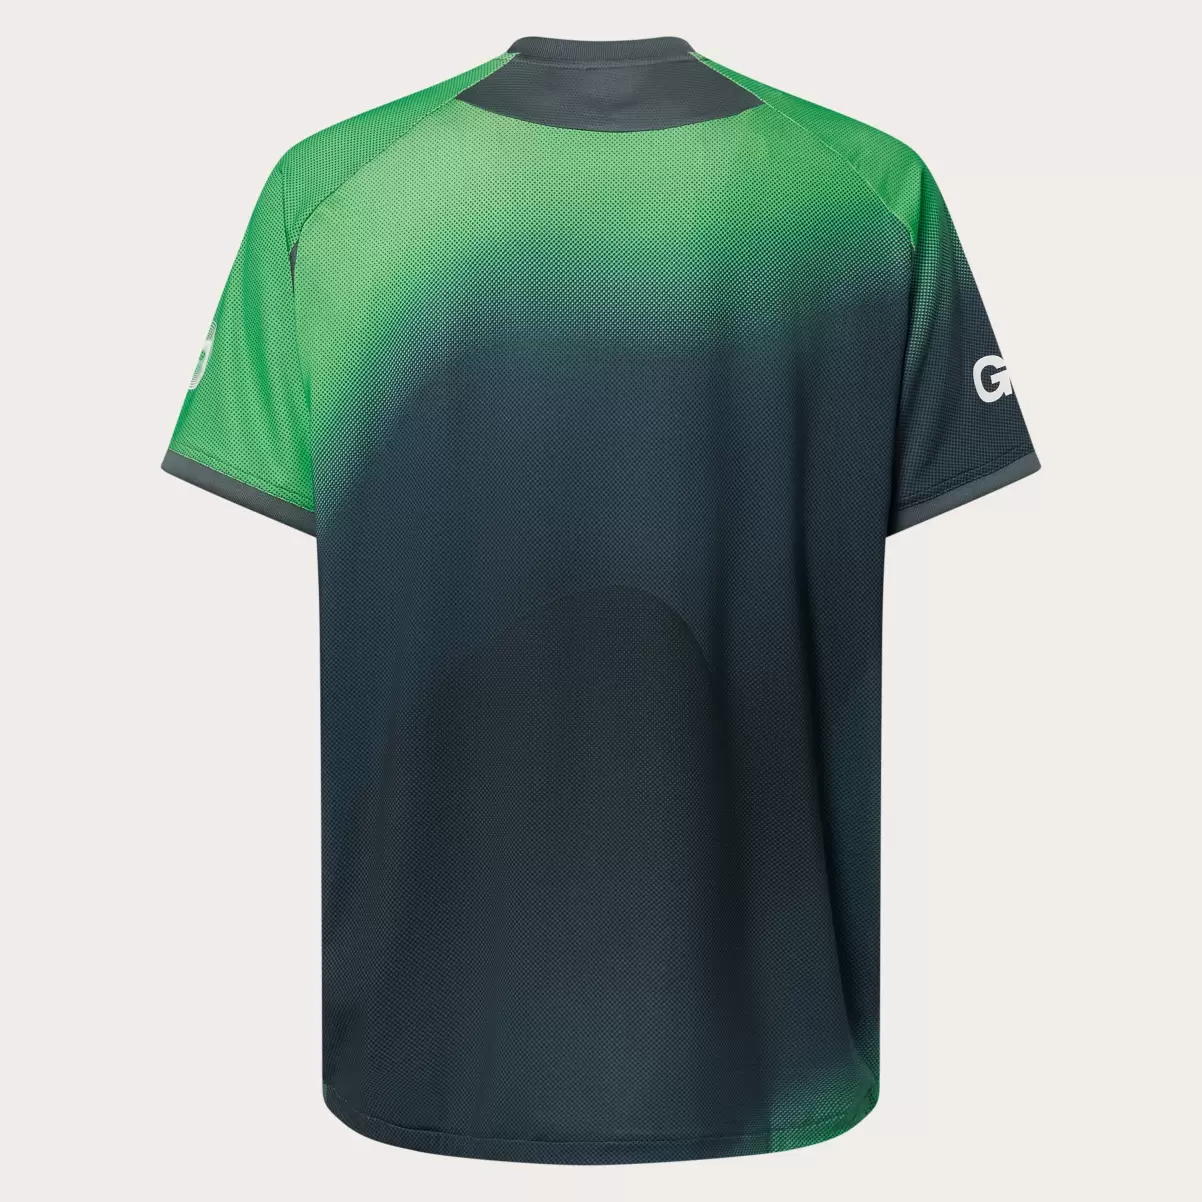 Virulent Green Polo Shirts Oakley Sand Camo Rgln Men - 3